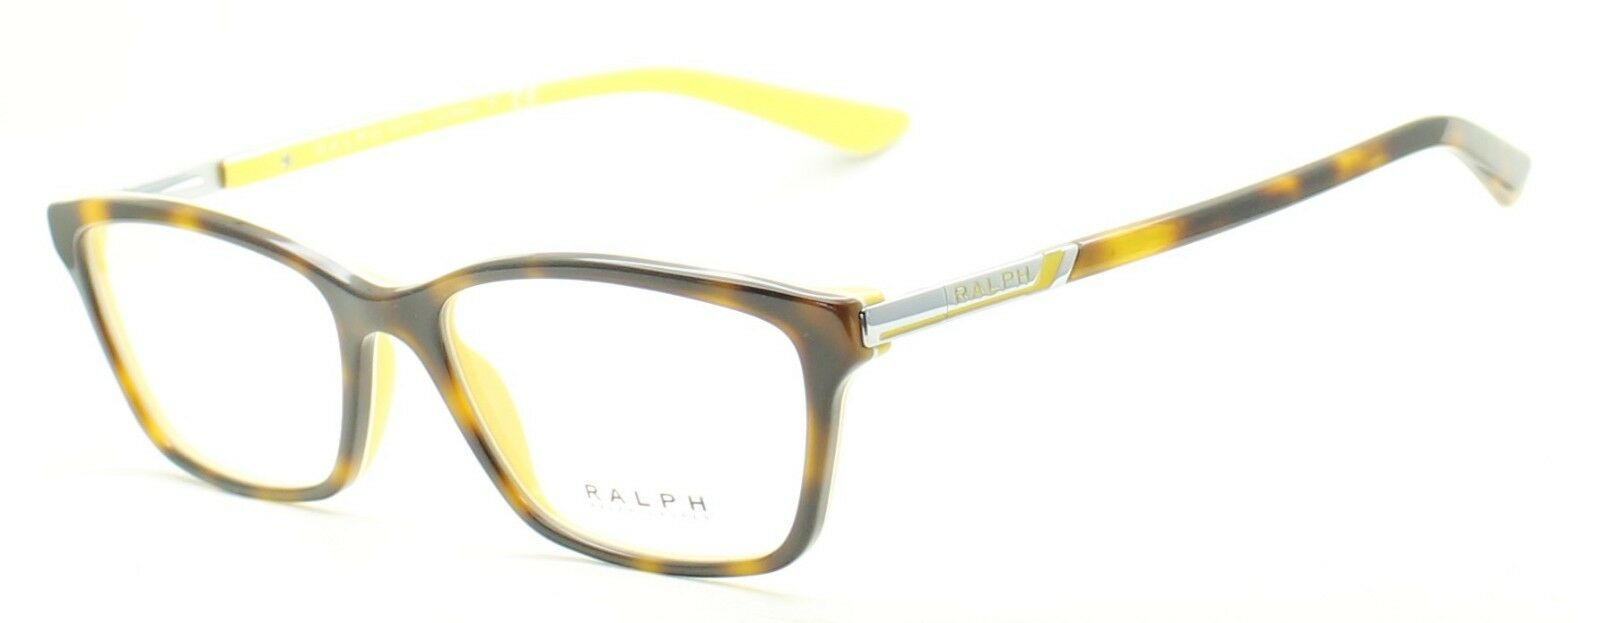 RALPH LAUREN RA 7044 1142 52mm RX Optical Eyewear FRAMES Eyeglasses Glasses  -New - GGV Eyewear